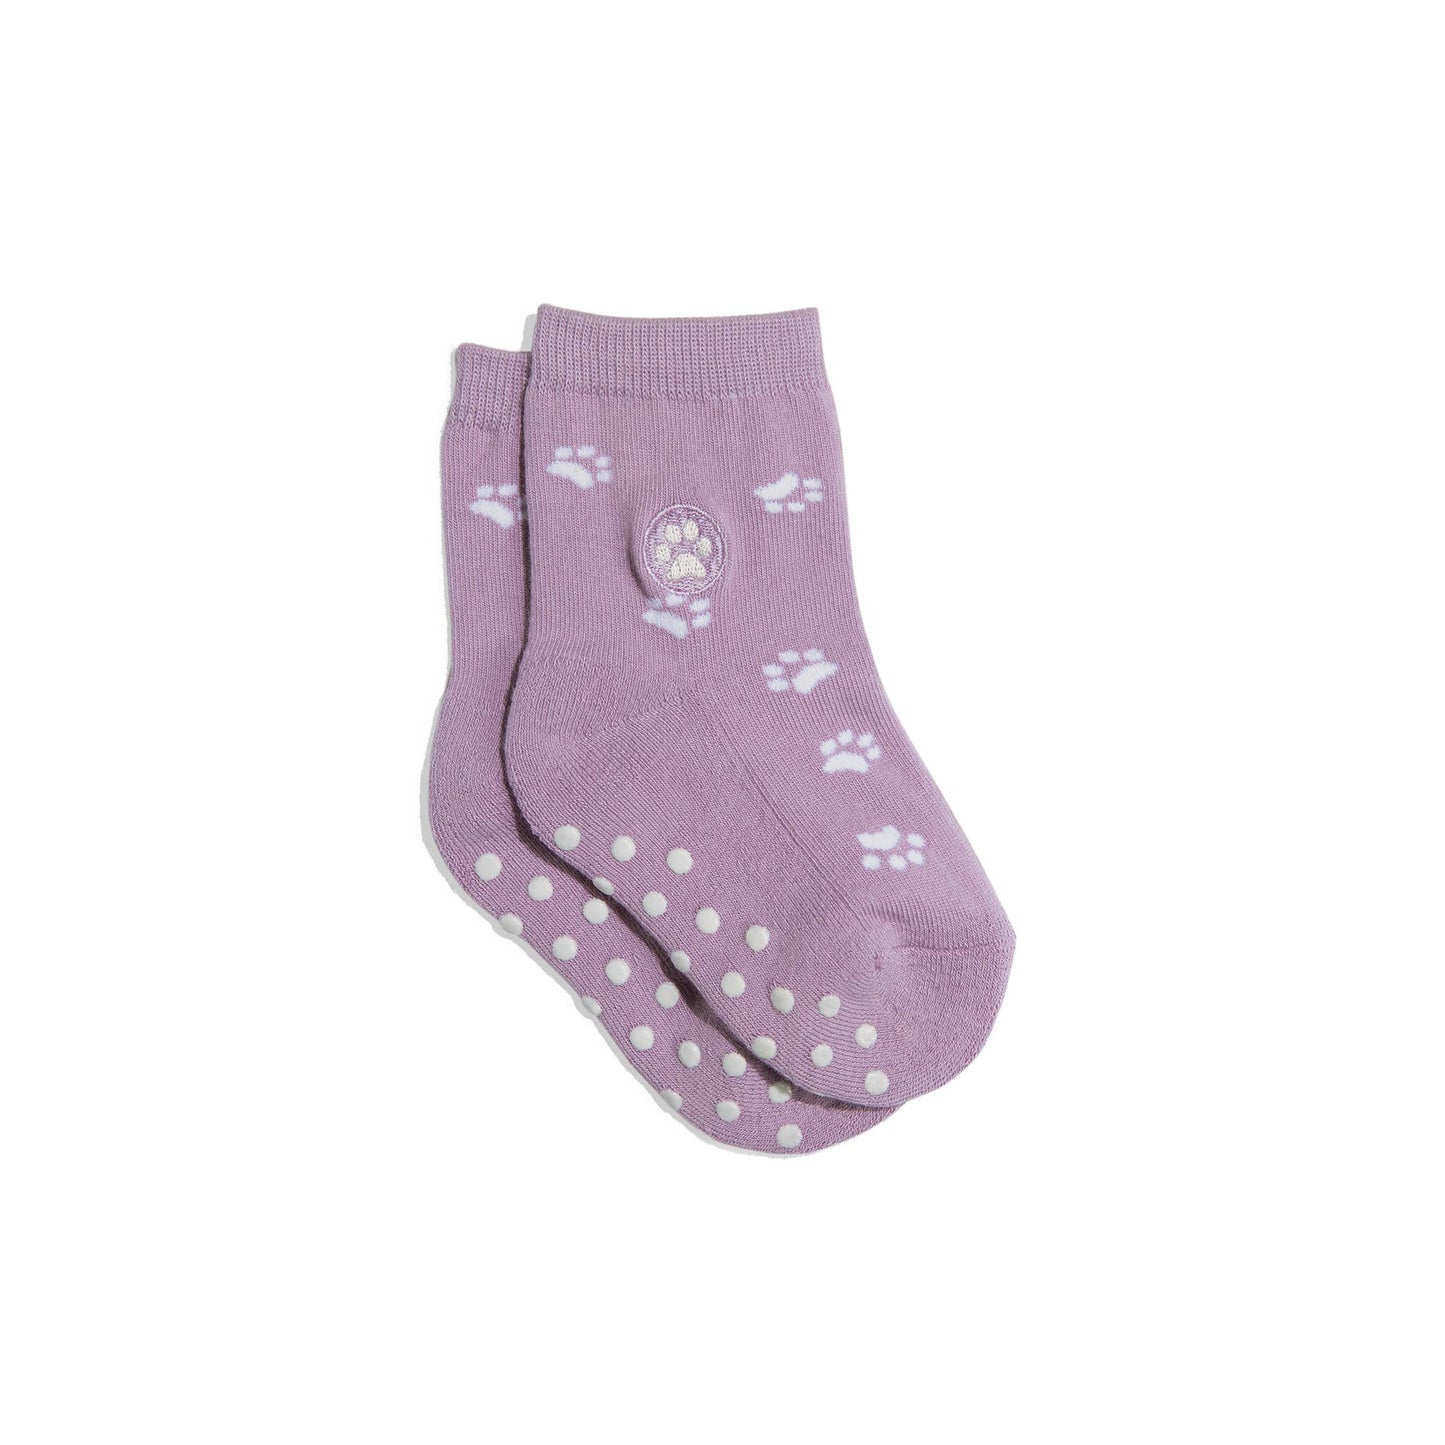 Kids Socks that Save Dogs (Purple Paw Prints)